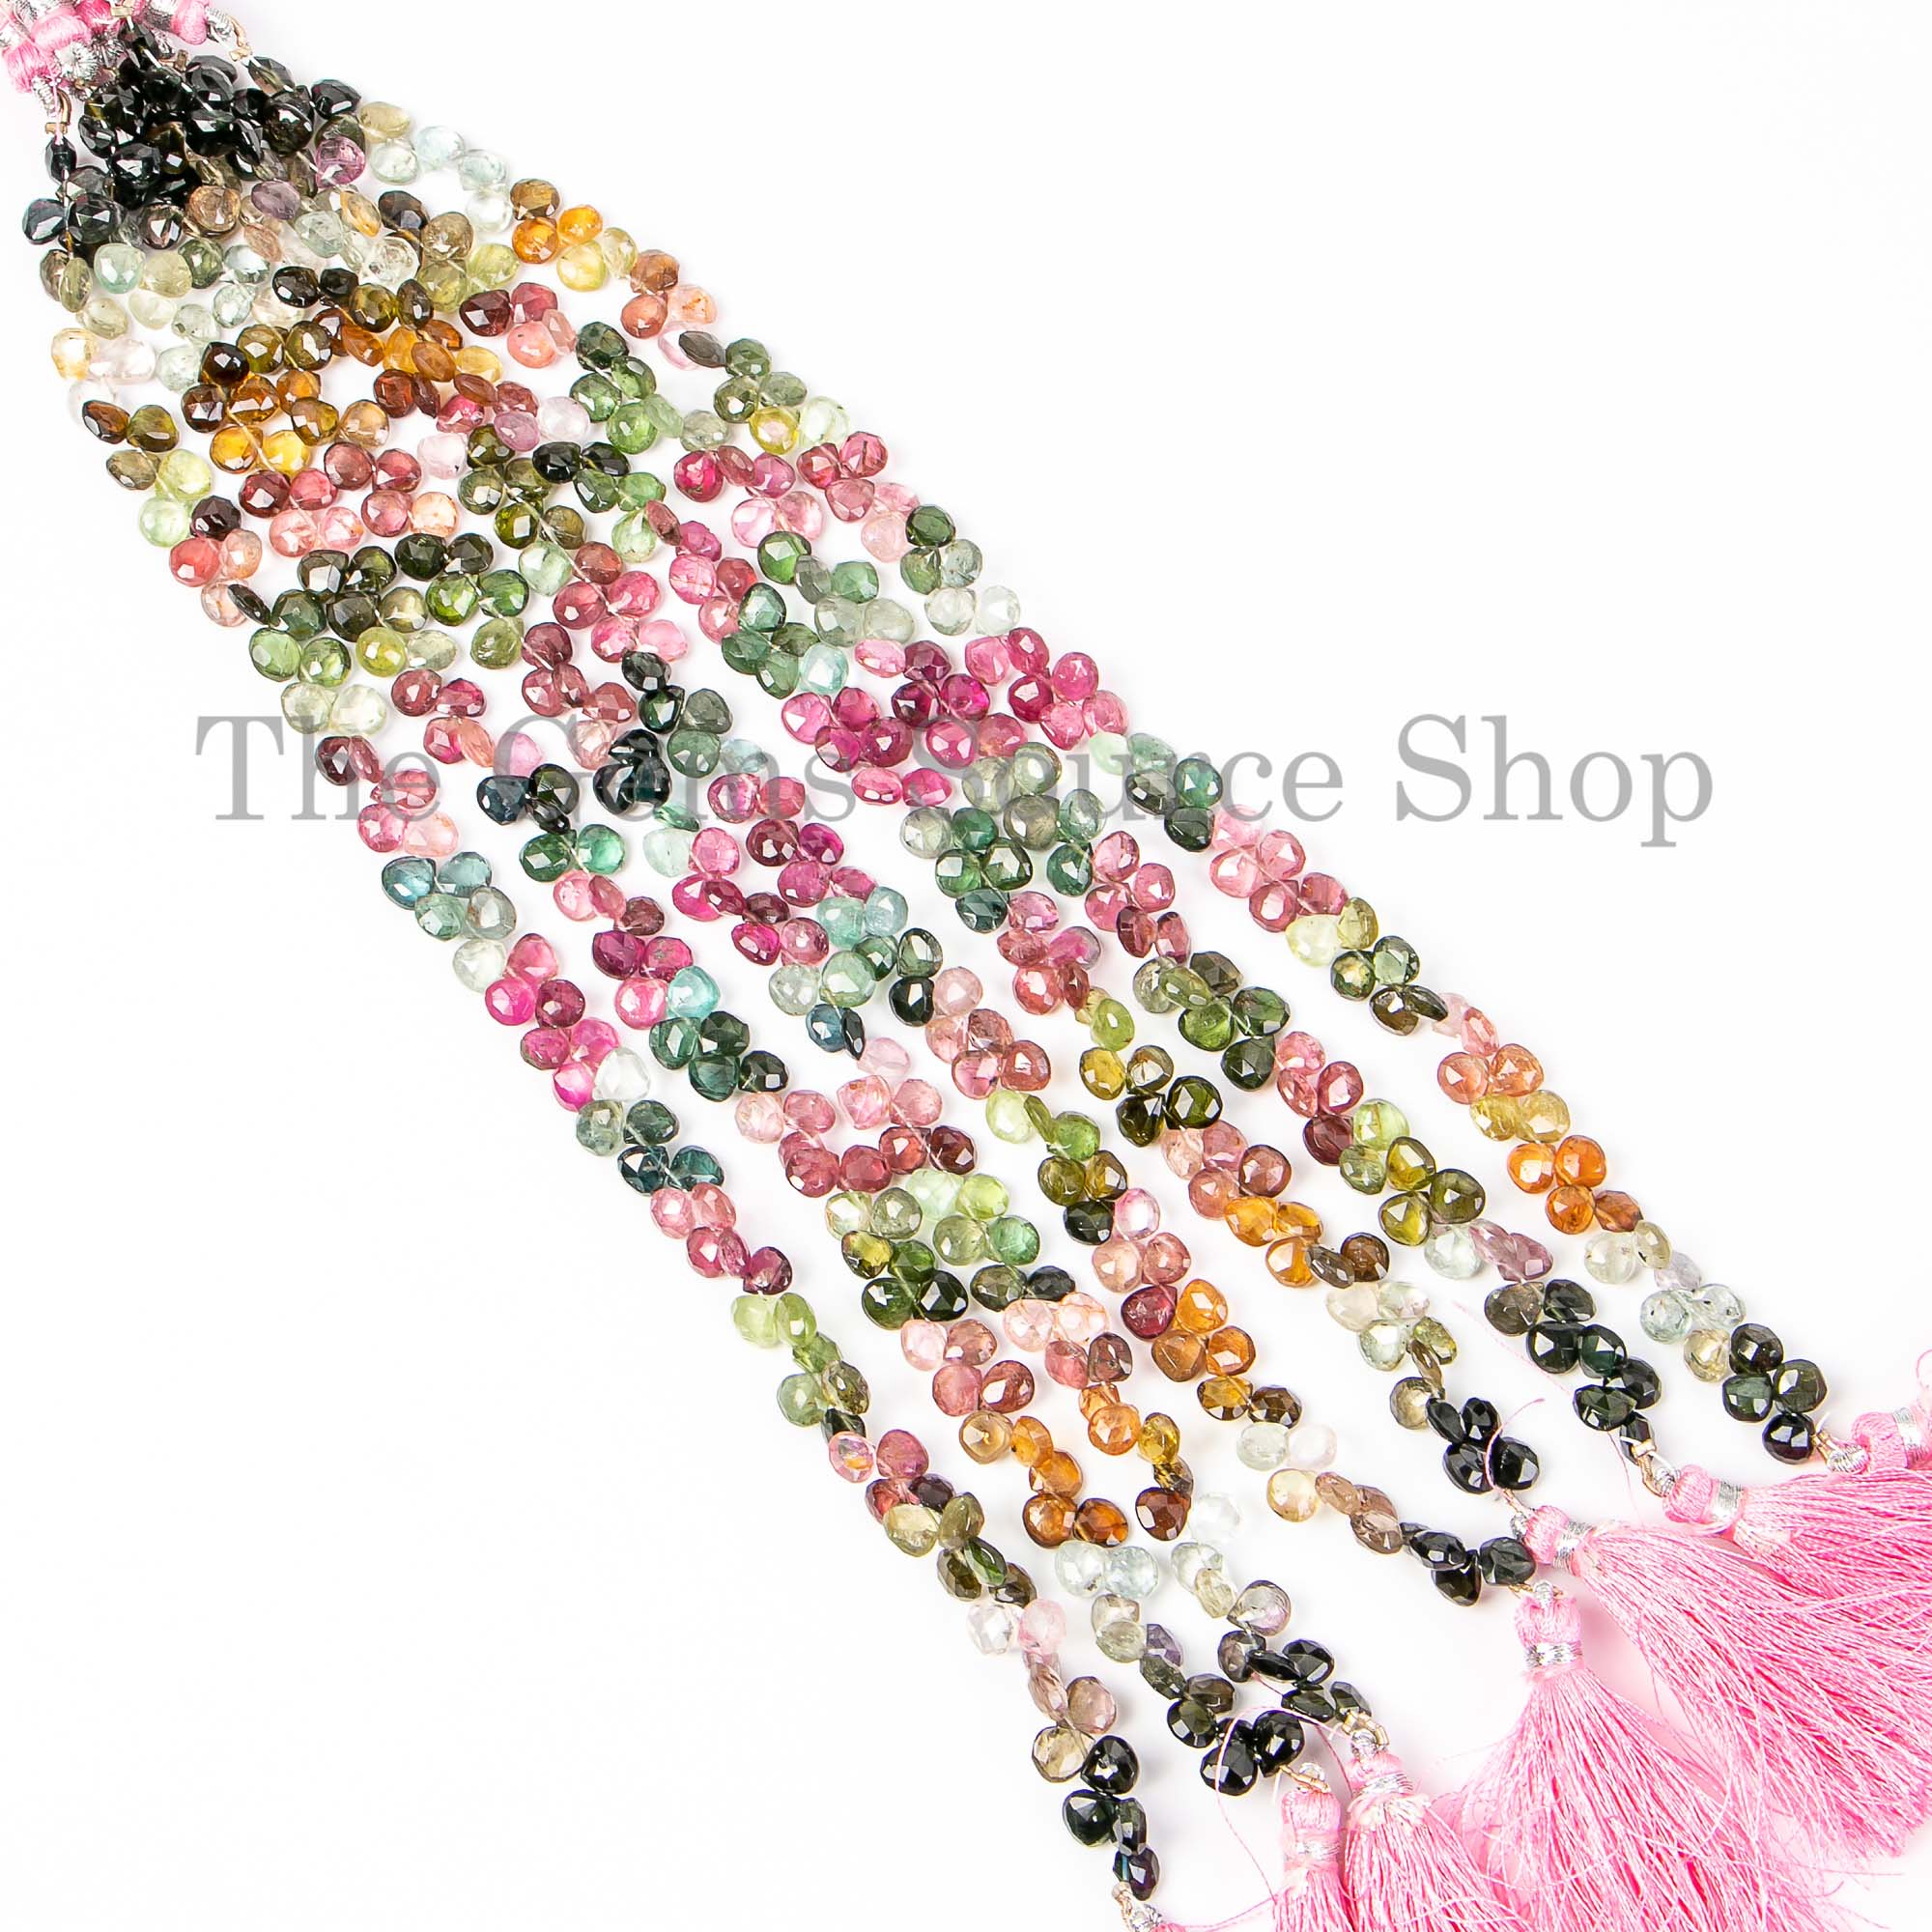 Multi Tourmaline Beads, Tourmaline Faceted Heart Beads, Side Drill Faceted Heart Beads